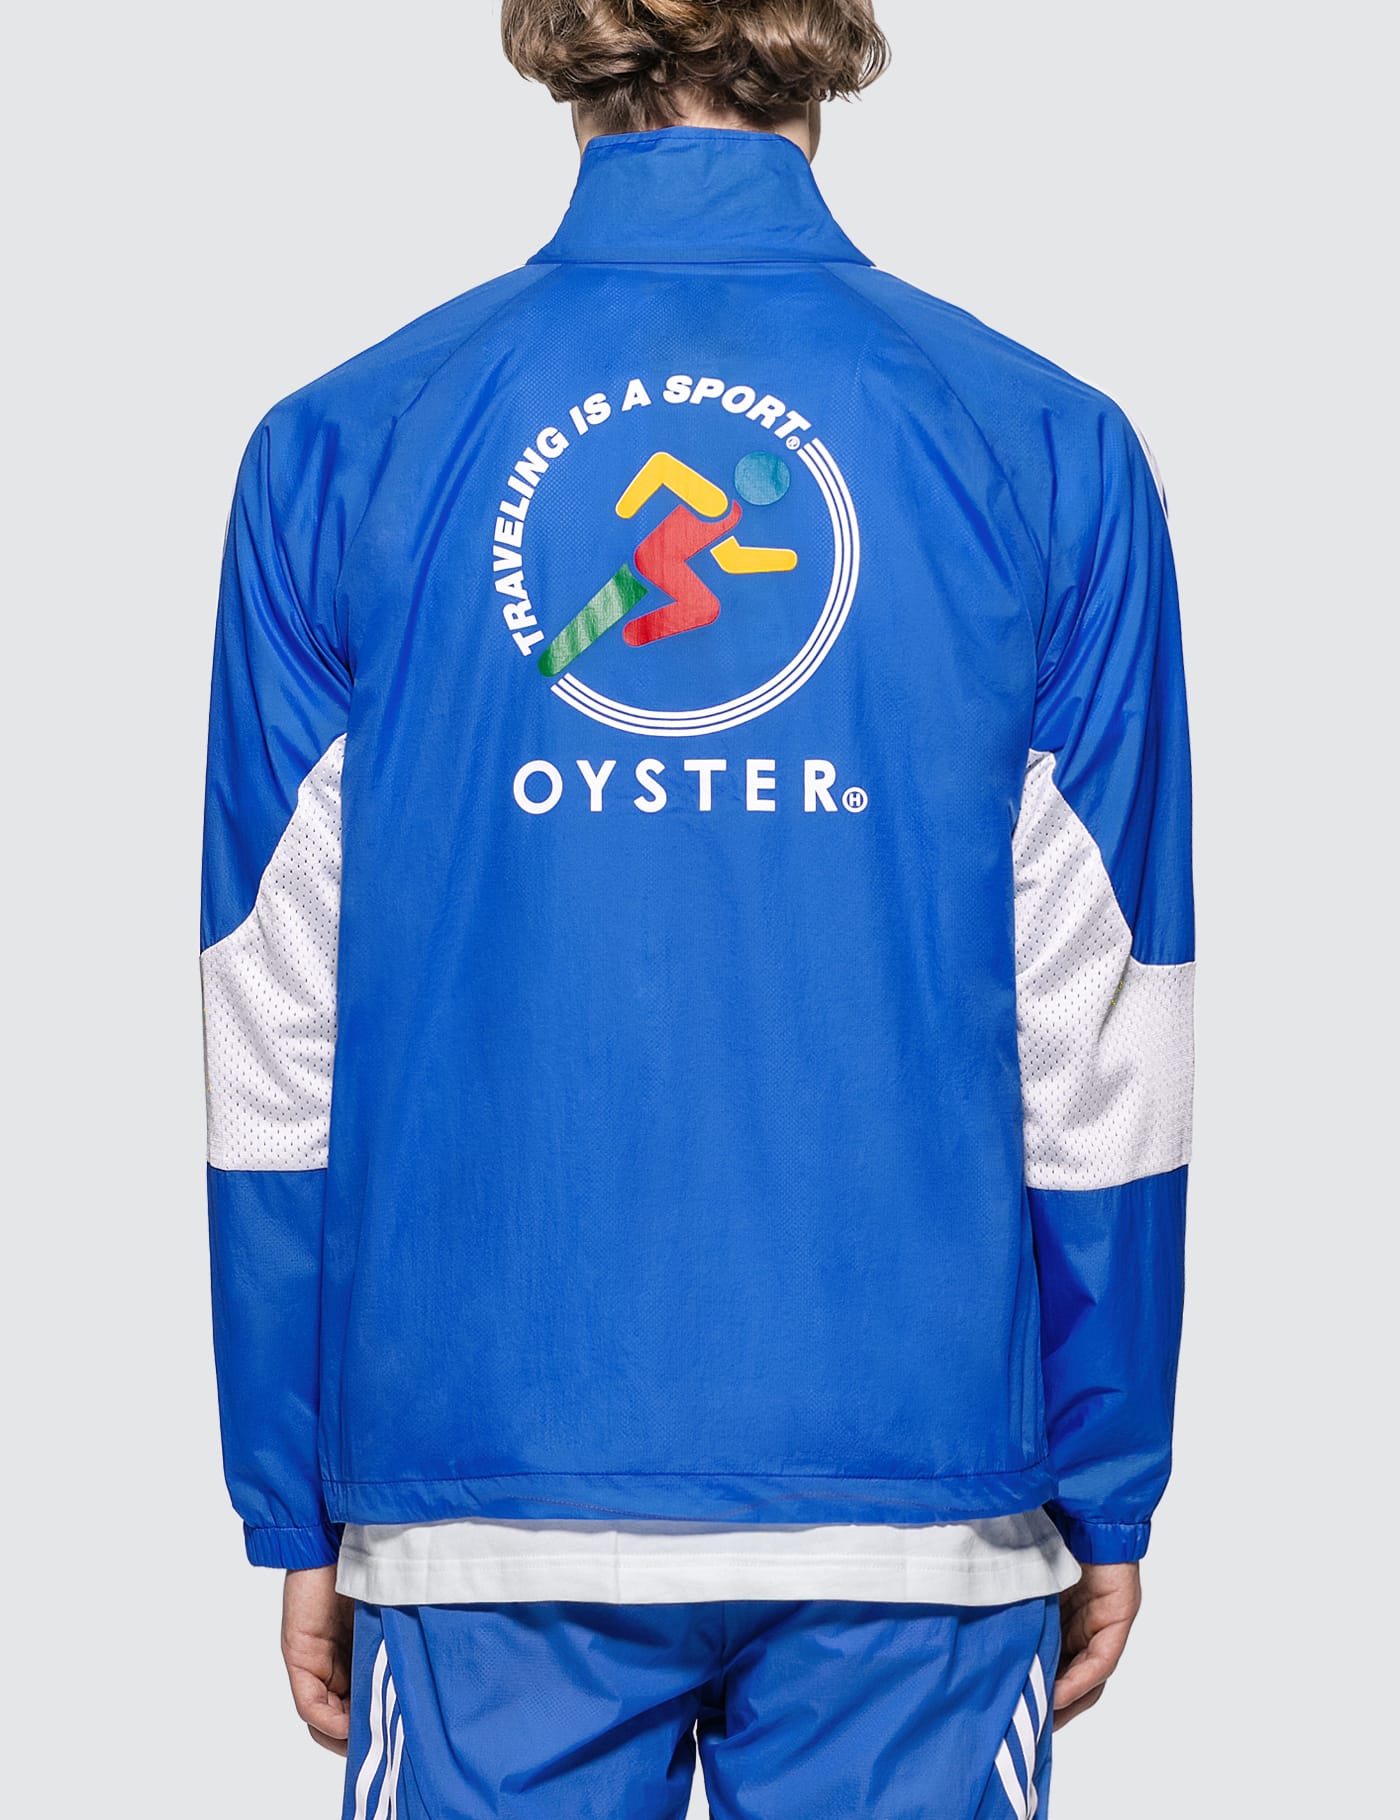 adidas oyster jacket